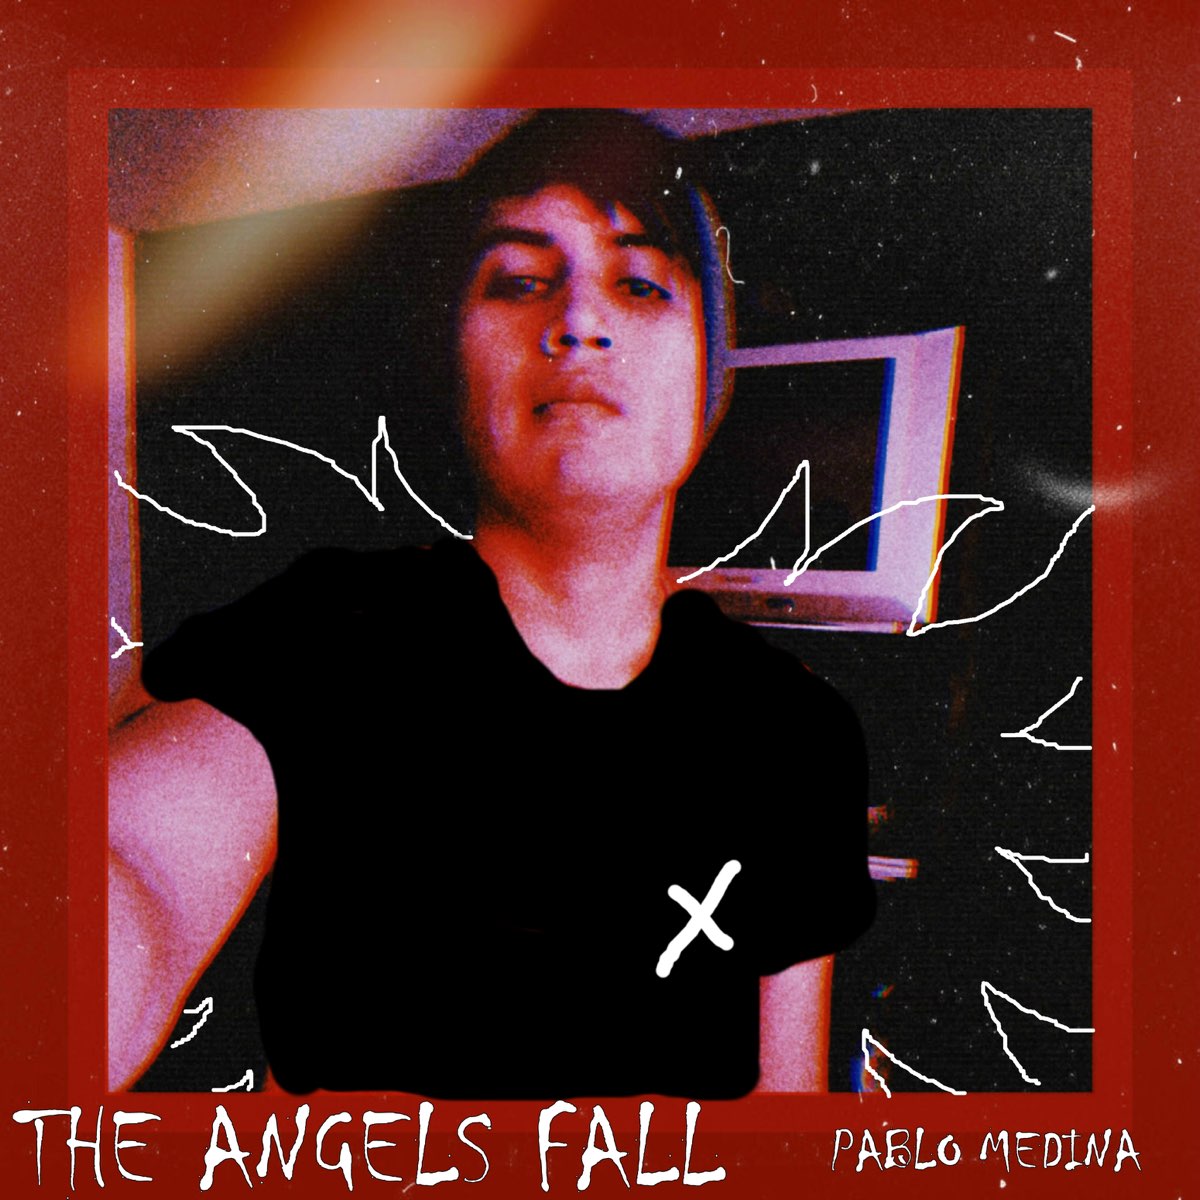 ‎The Angels Fall - Single - Album by Pablo Medina - Apple Music